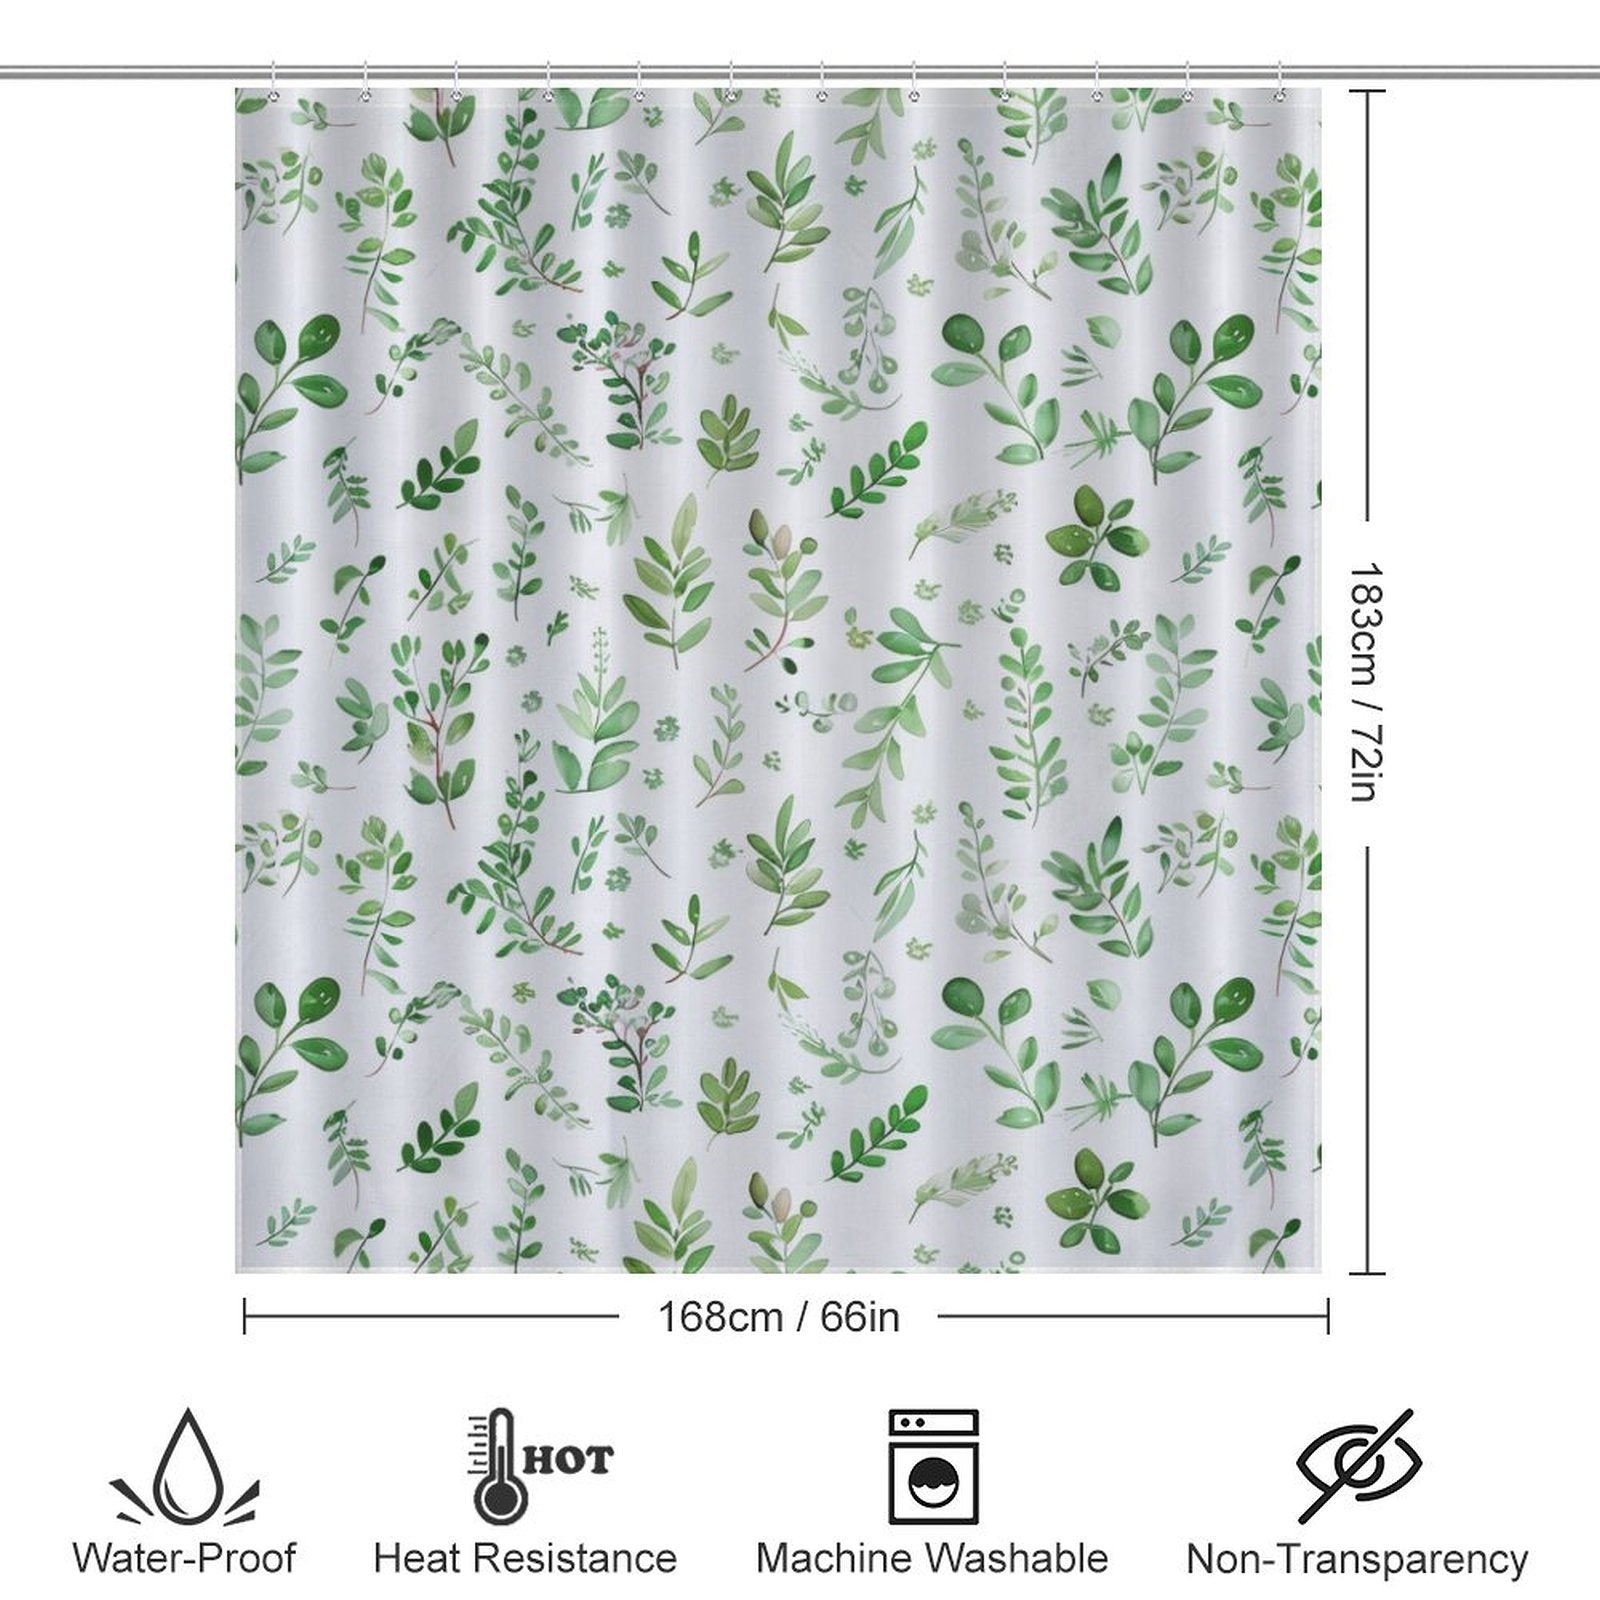 Minimalist Green Floral Boho Shower Curtain